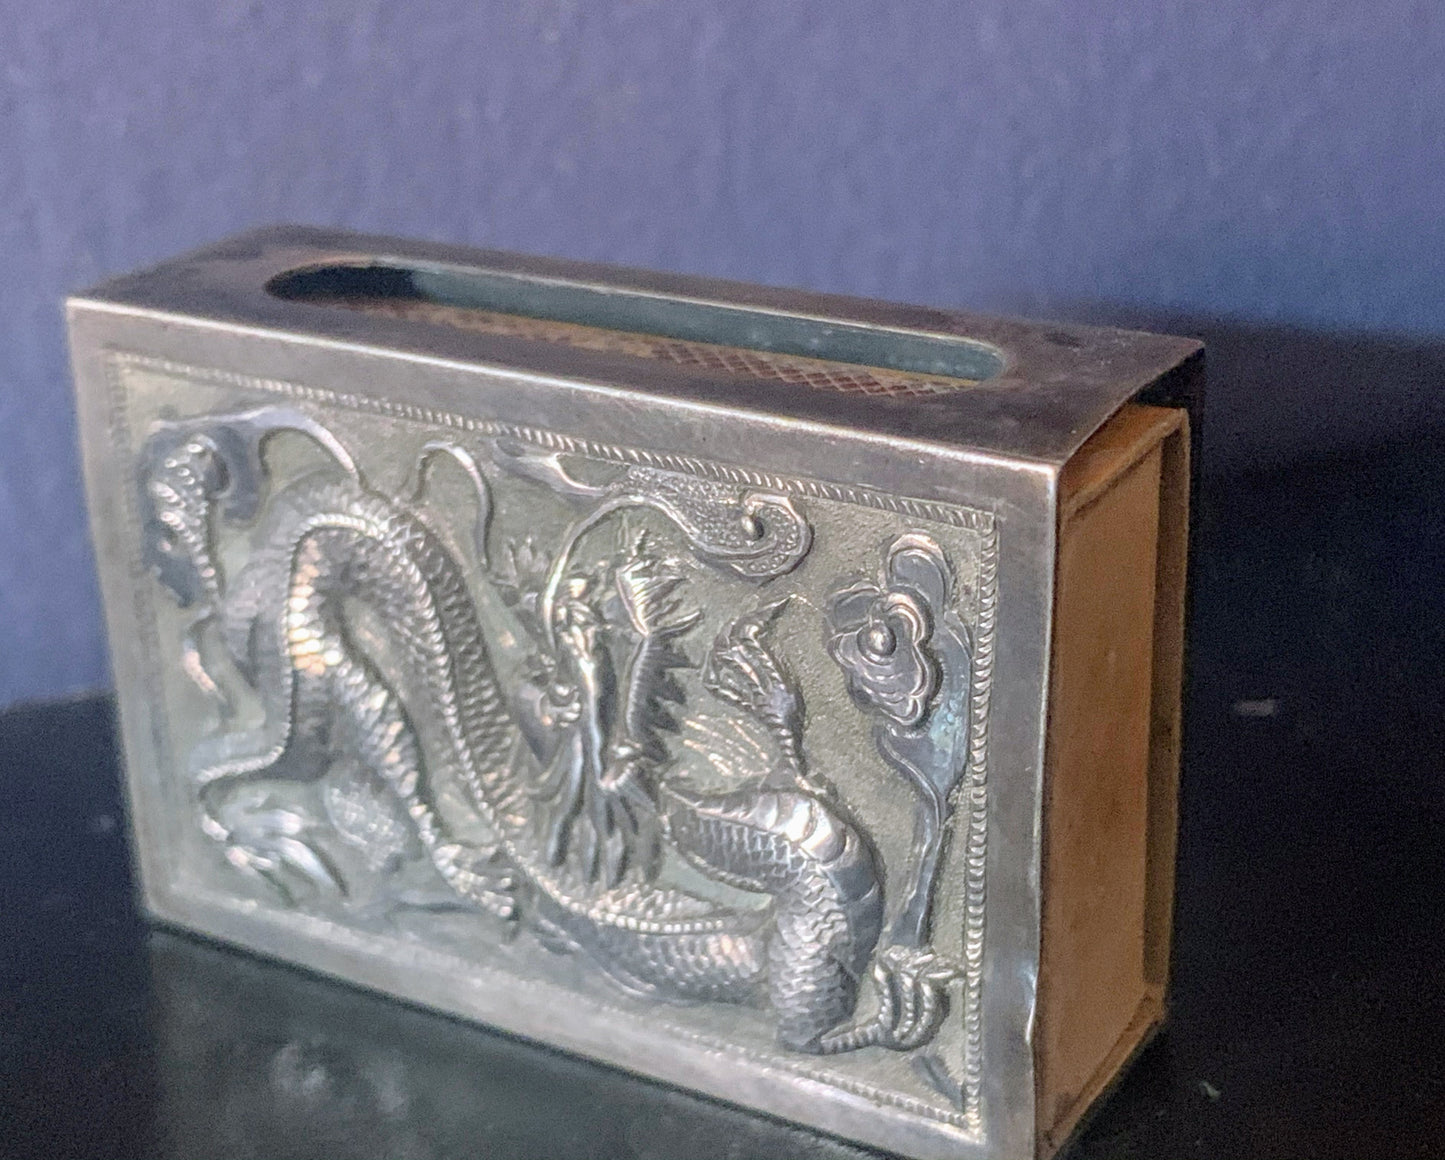 A silver matchbox cover